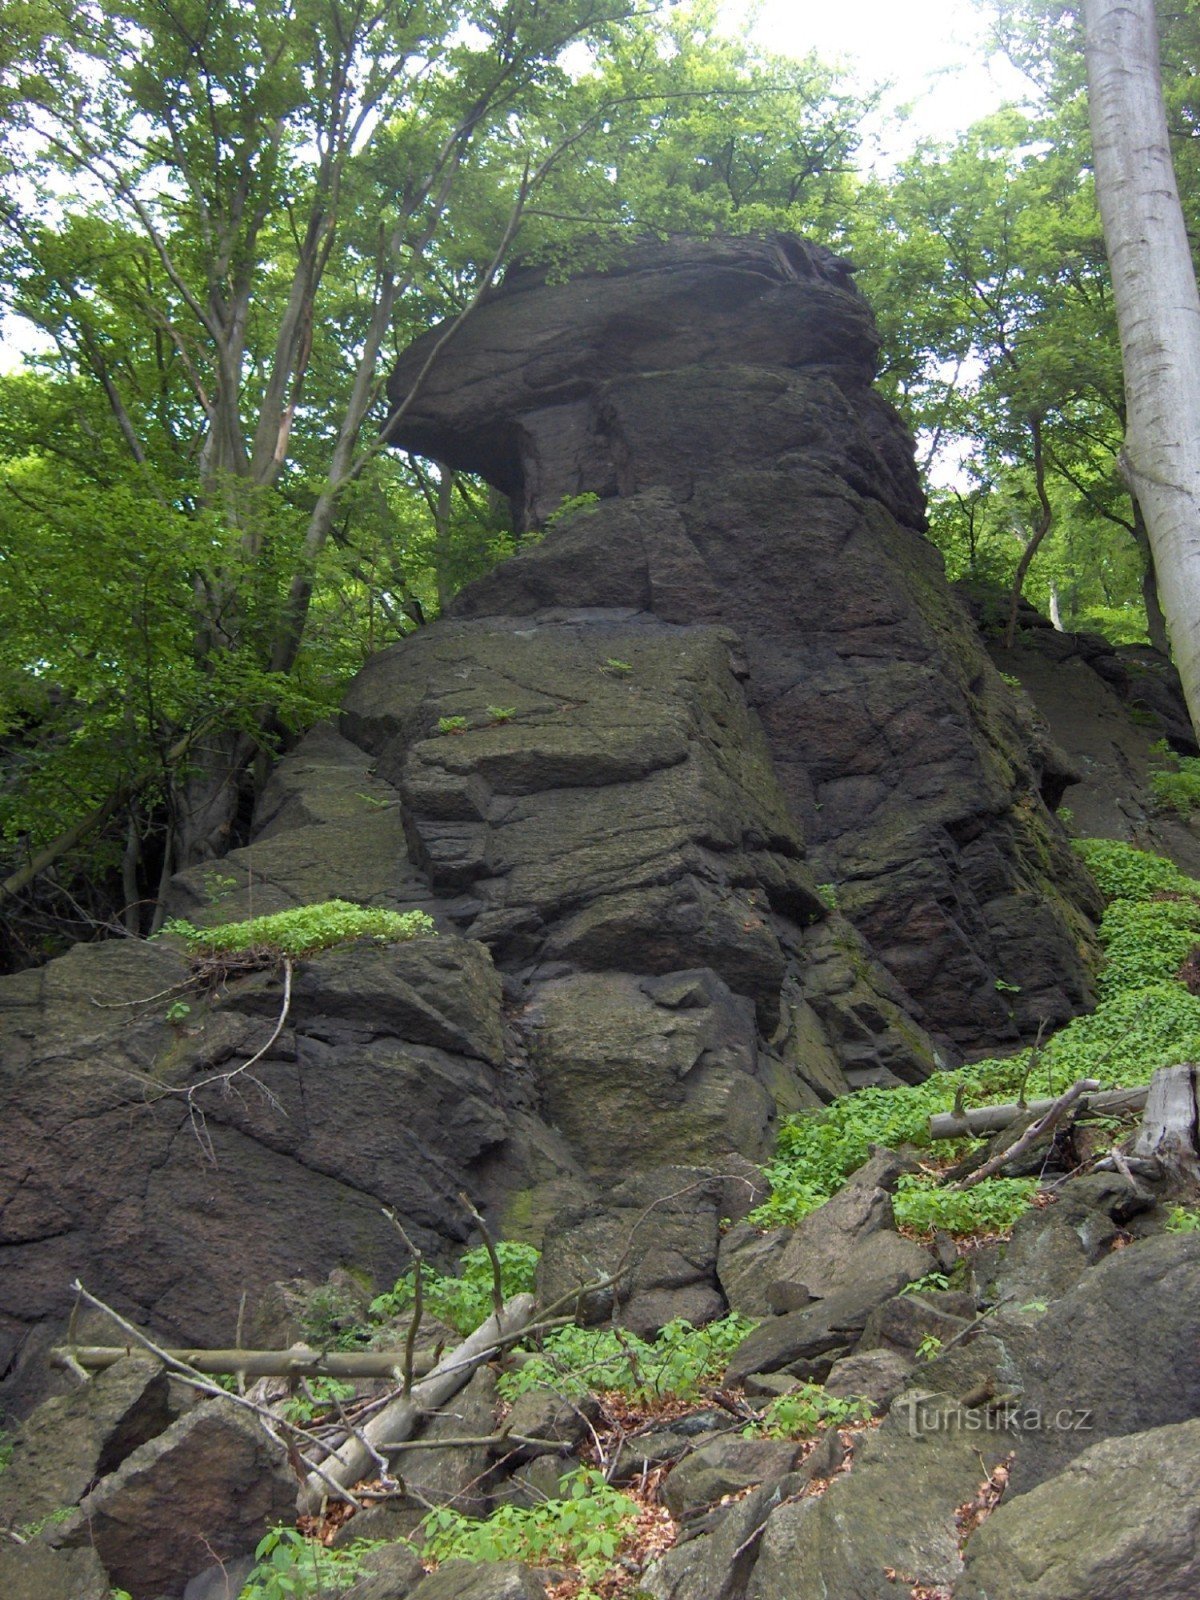 Trempe rocks